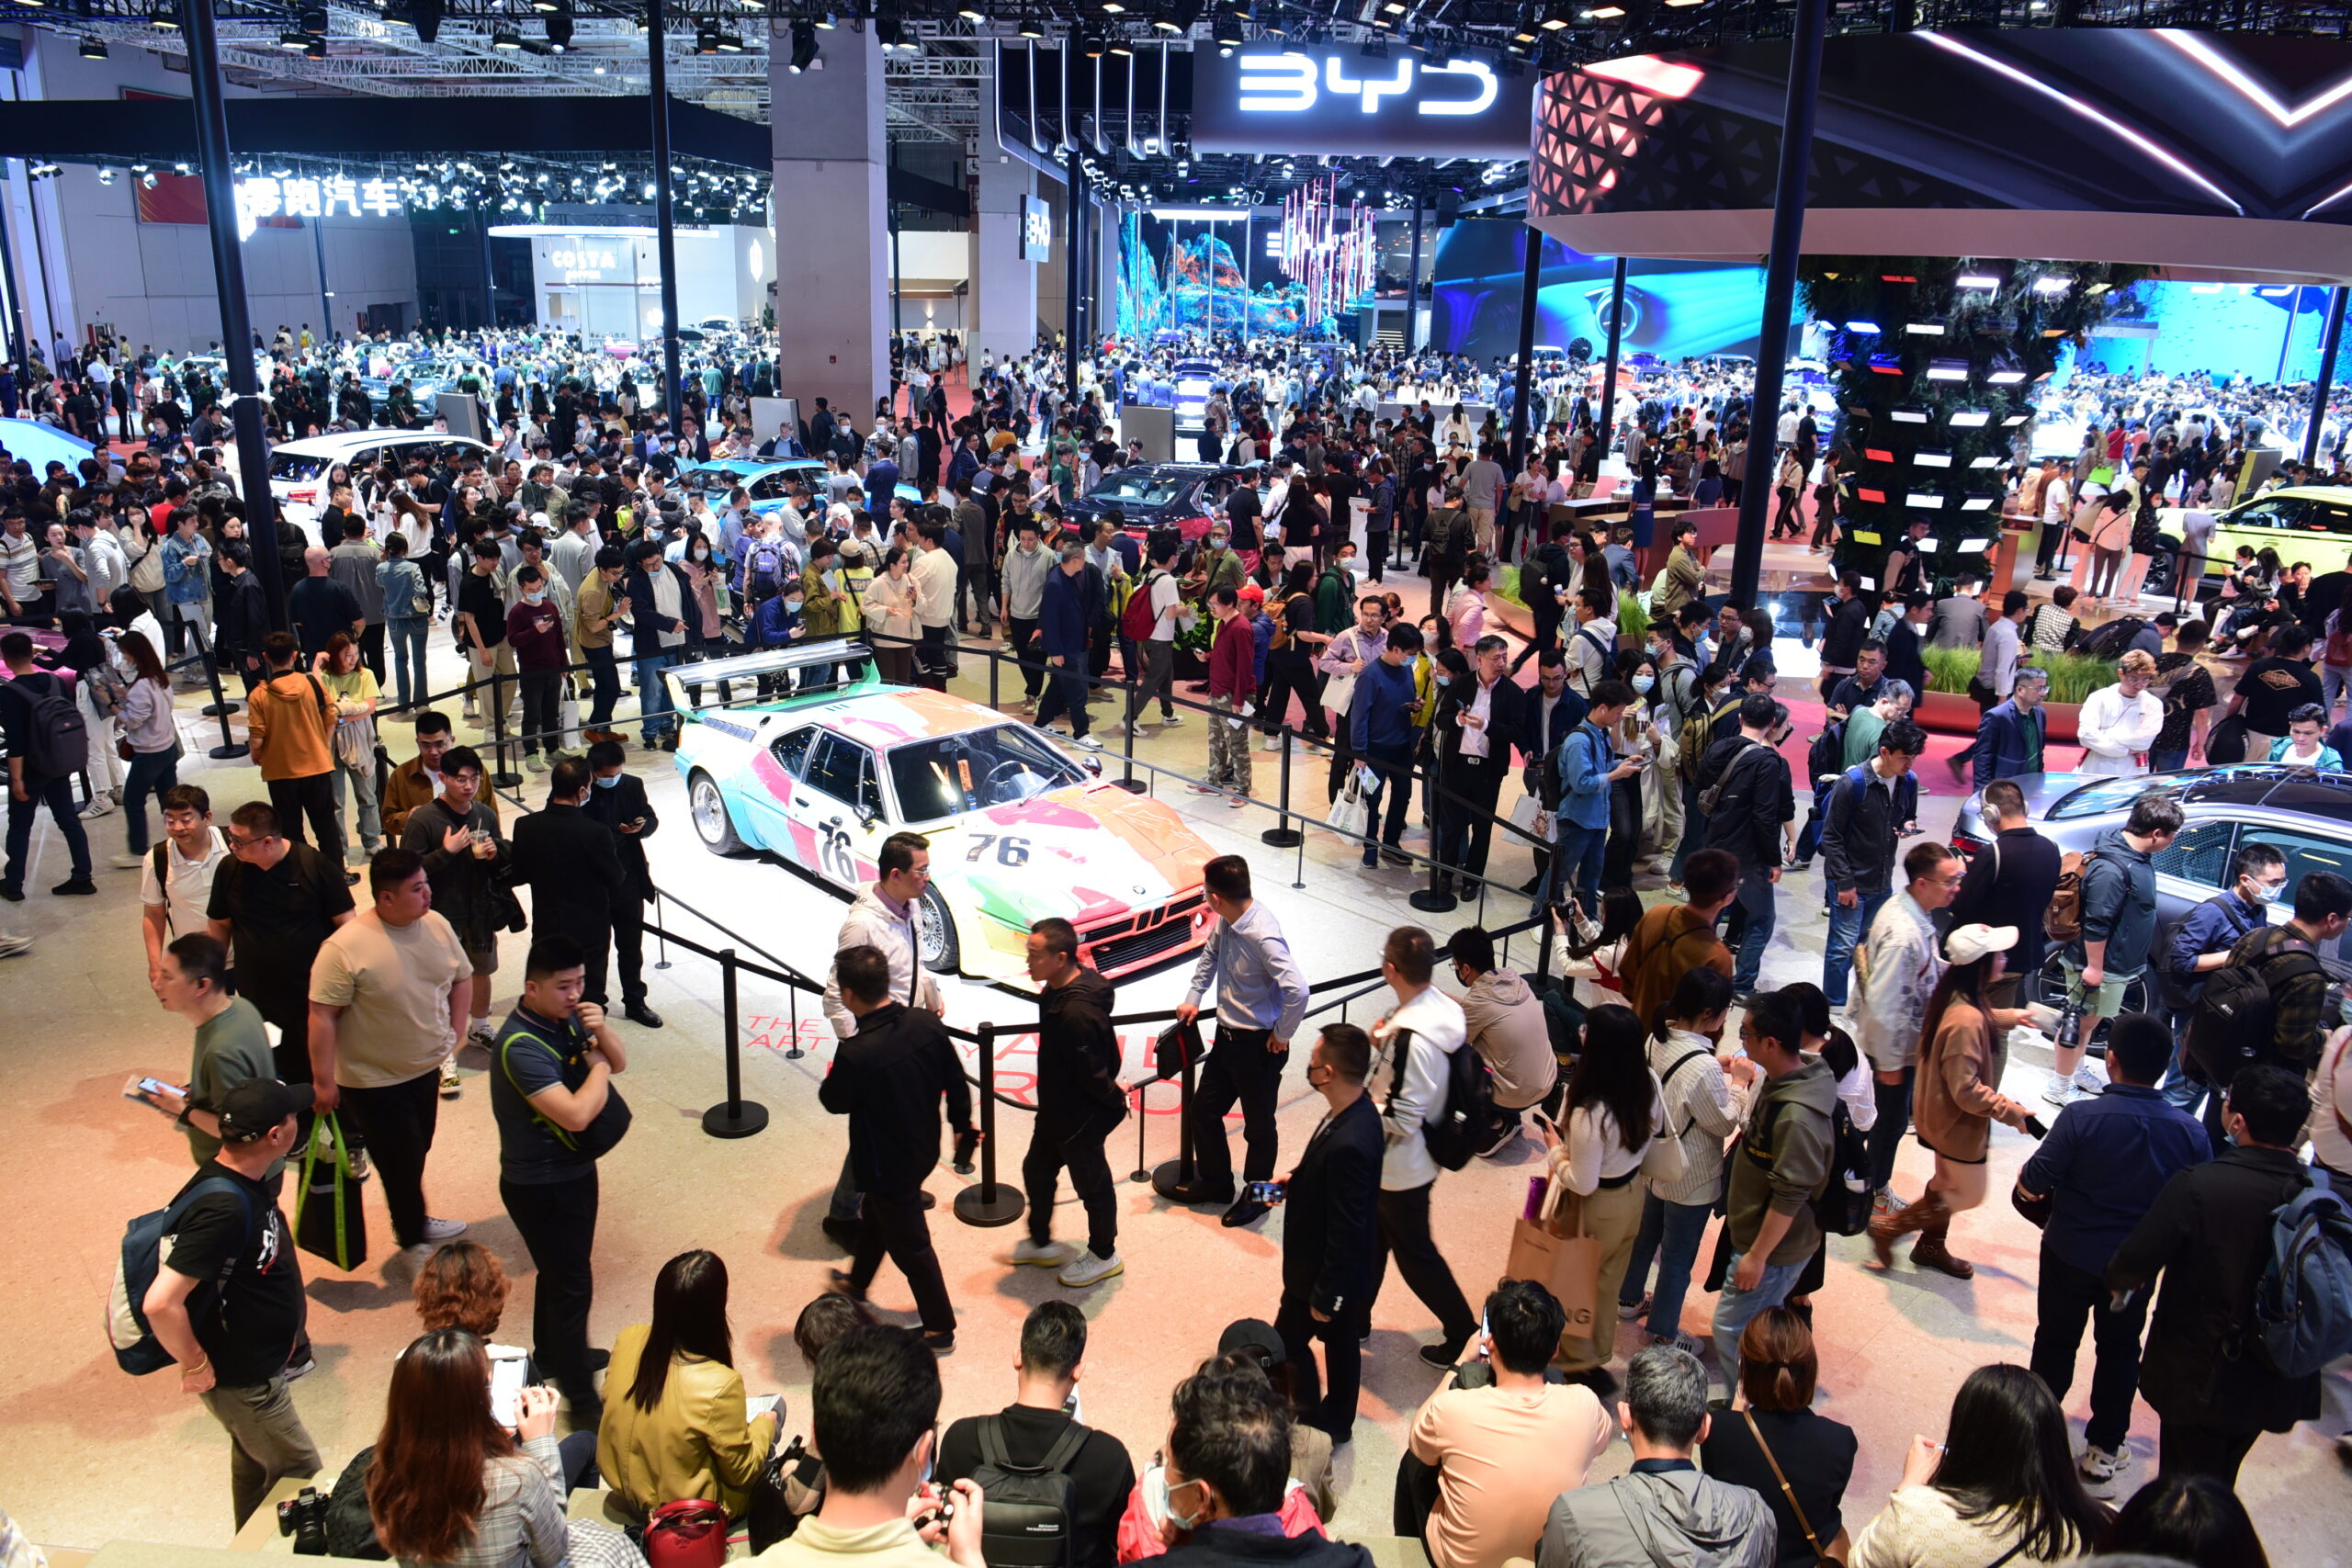 Shanghai Auto Show: Insights Into the Future of Auto